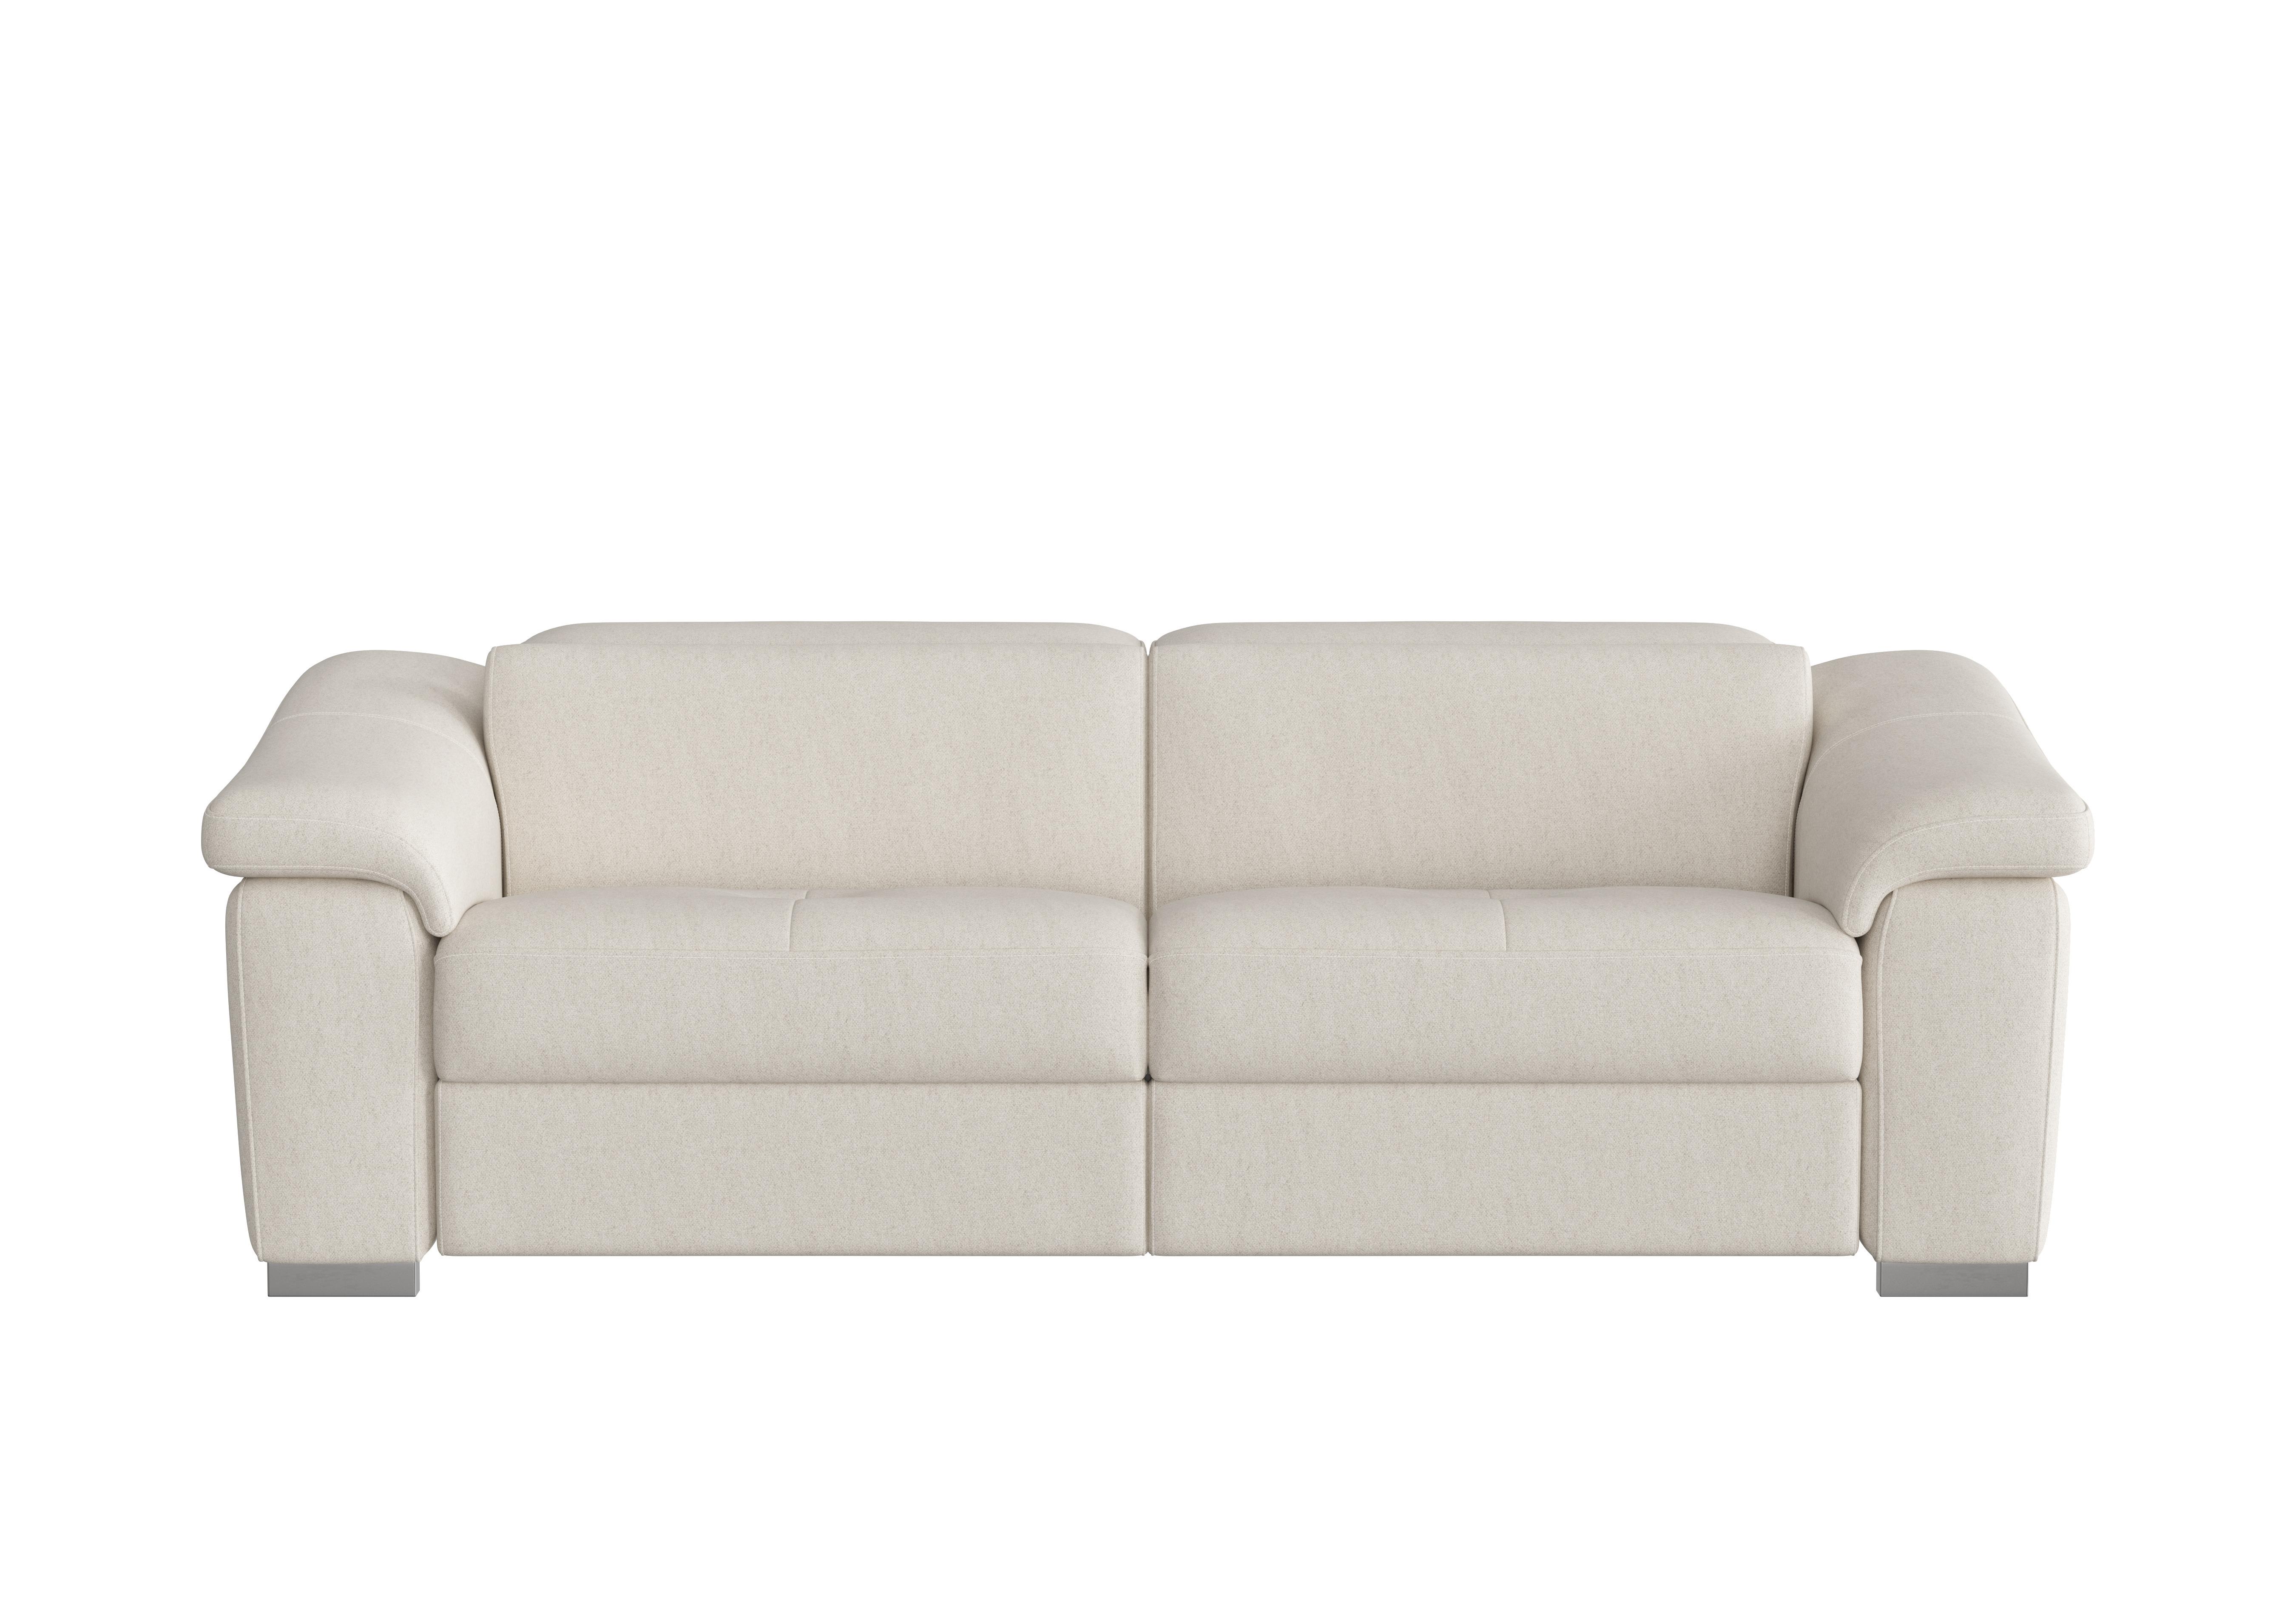 Galileo 3 Seater Fabric Sofa in Fuente Beige Ch on Furniture Village